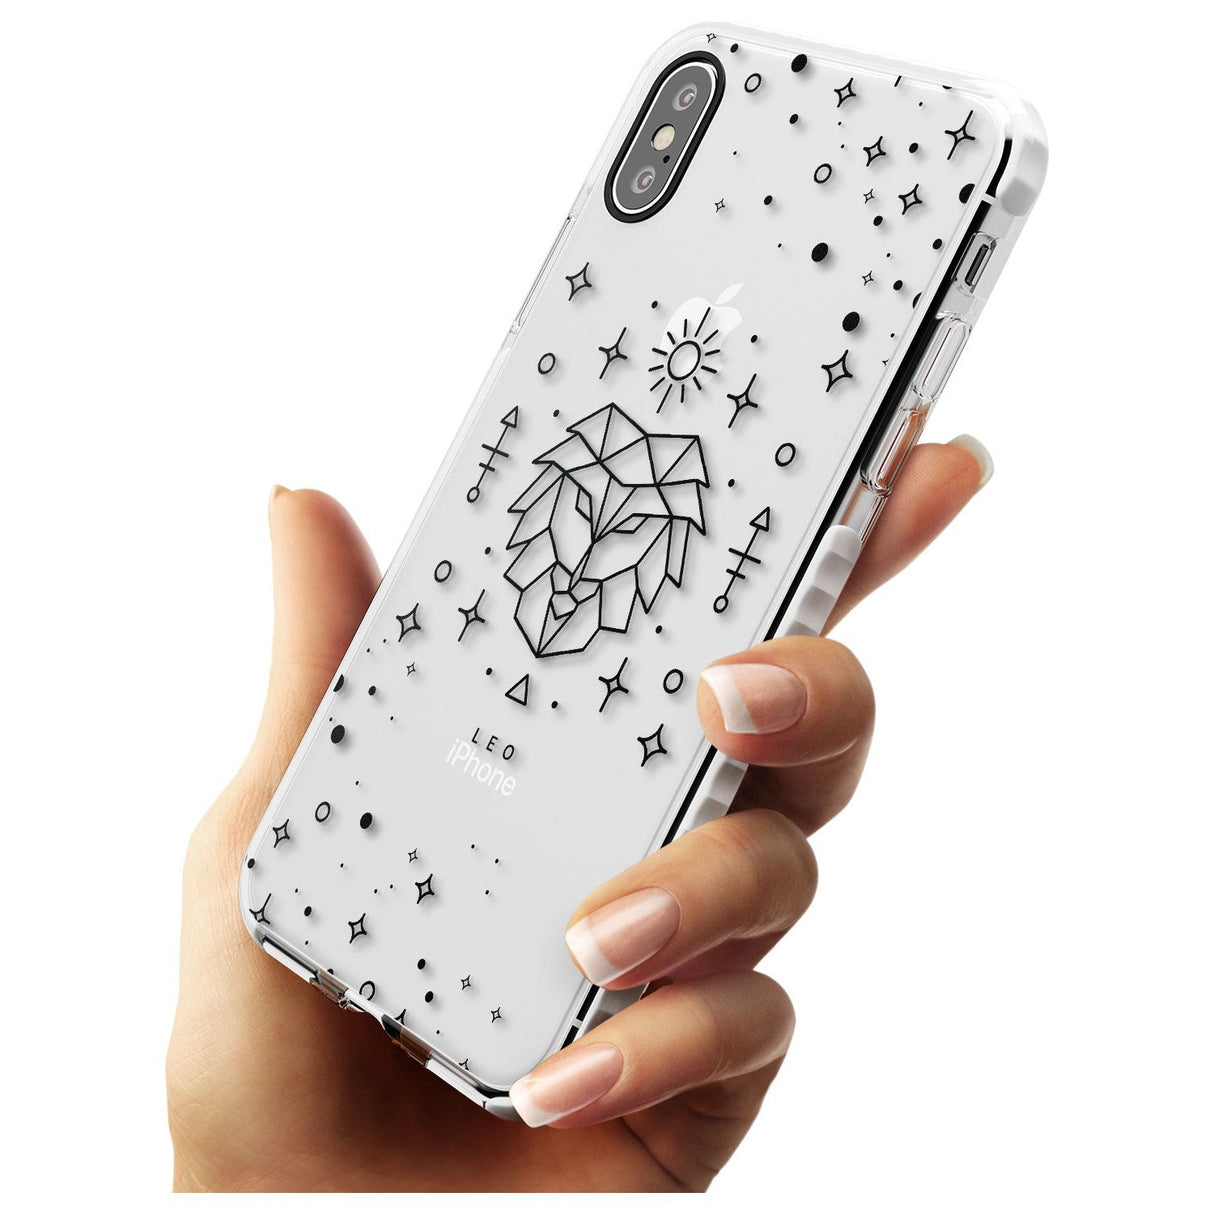 Leo Emblem - Transparent Design Impact Phone Case for iPhone X XS Max XR